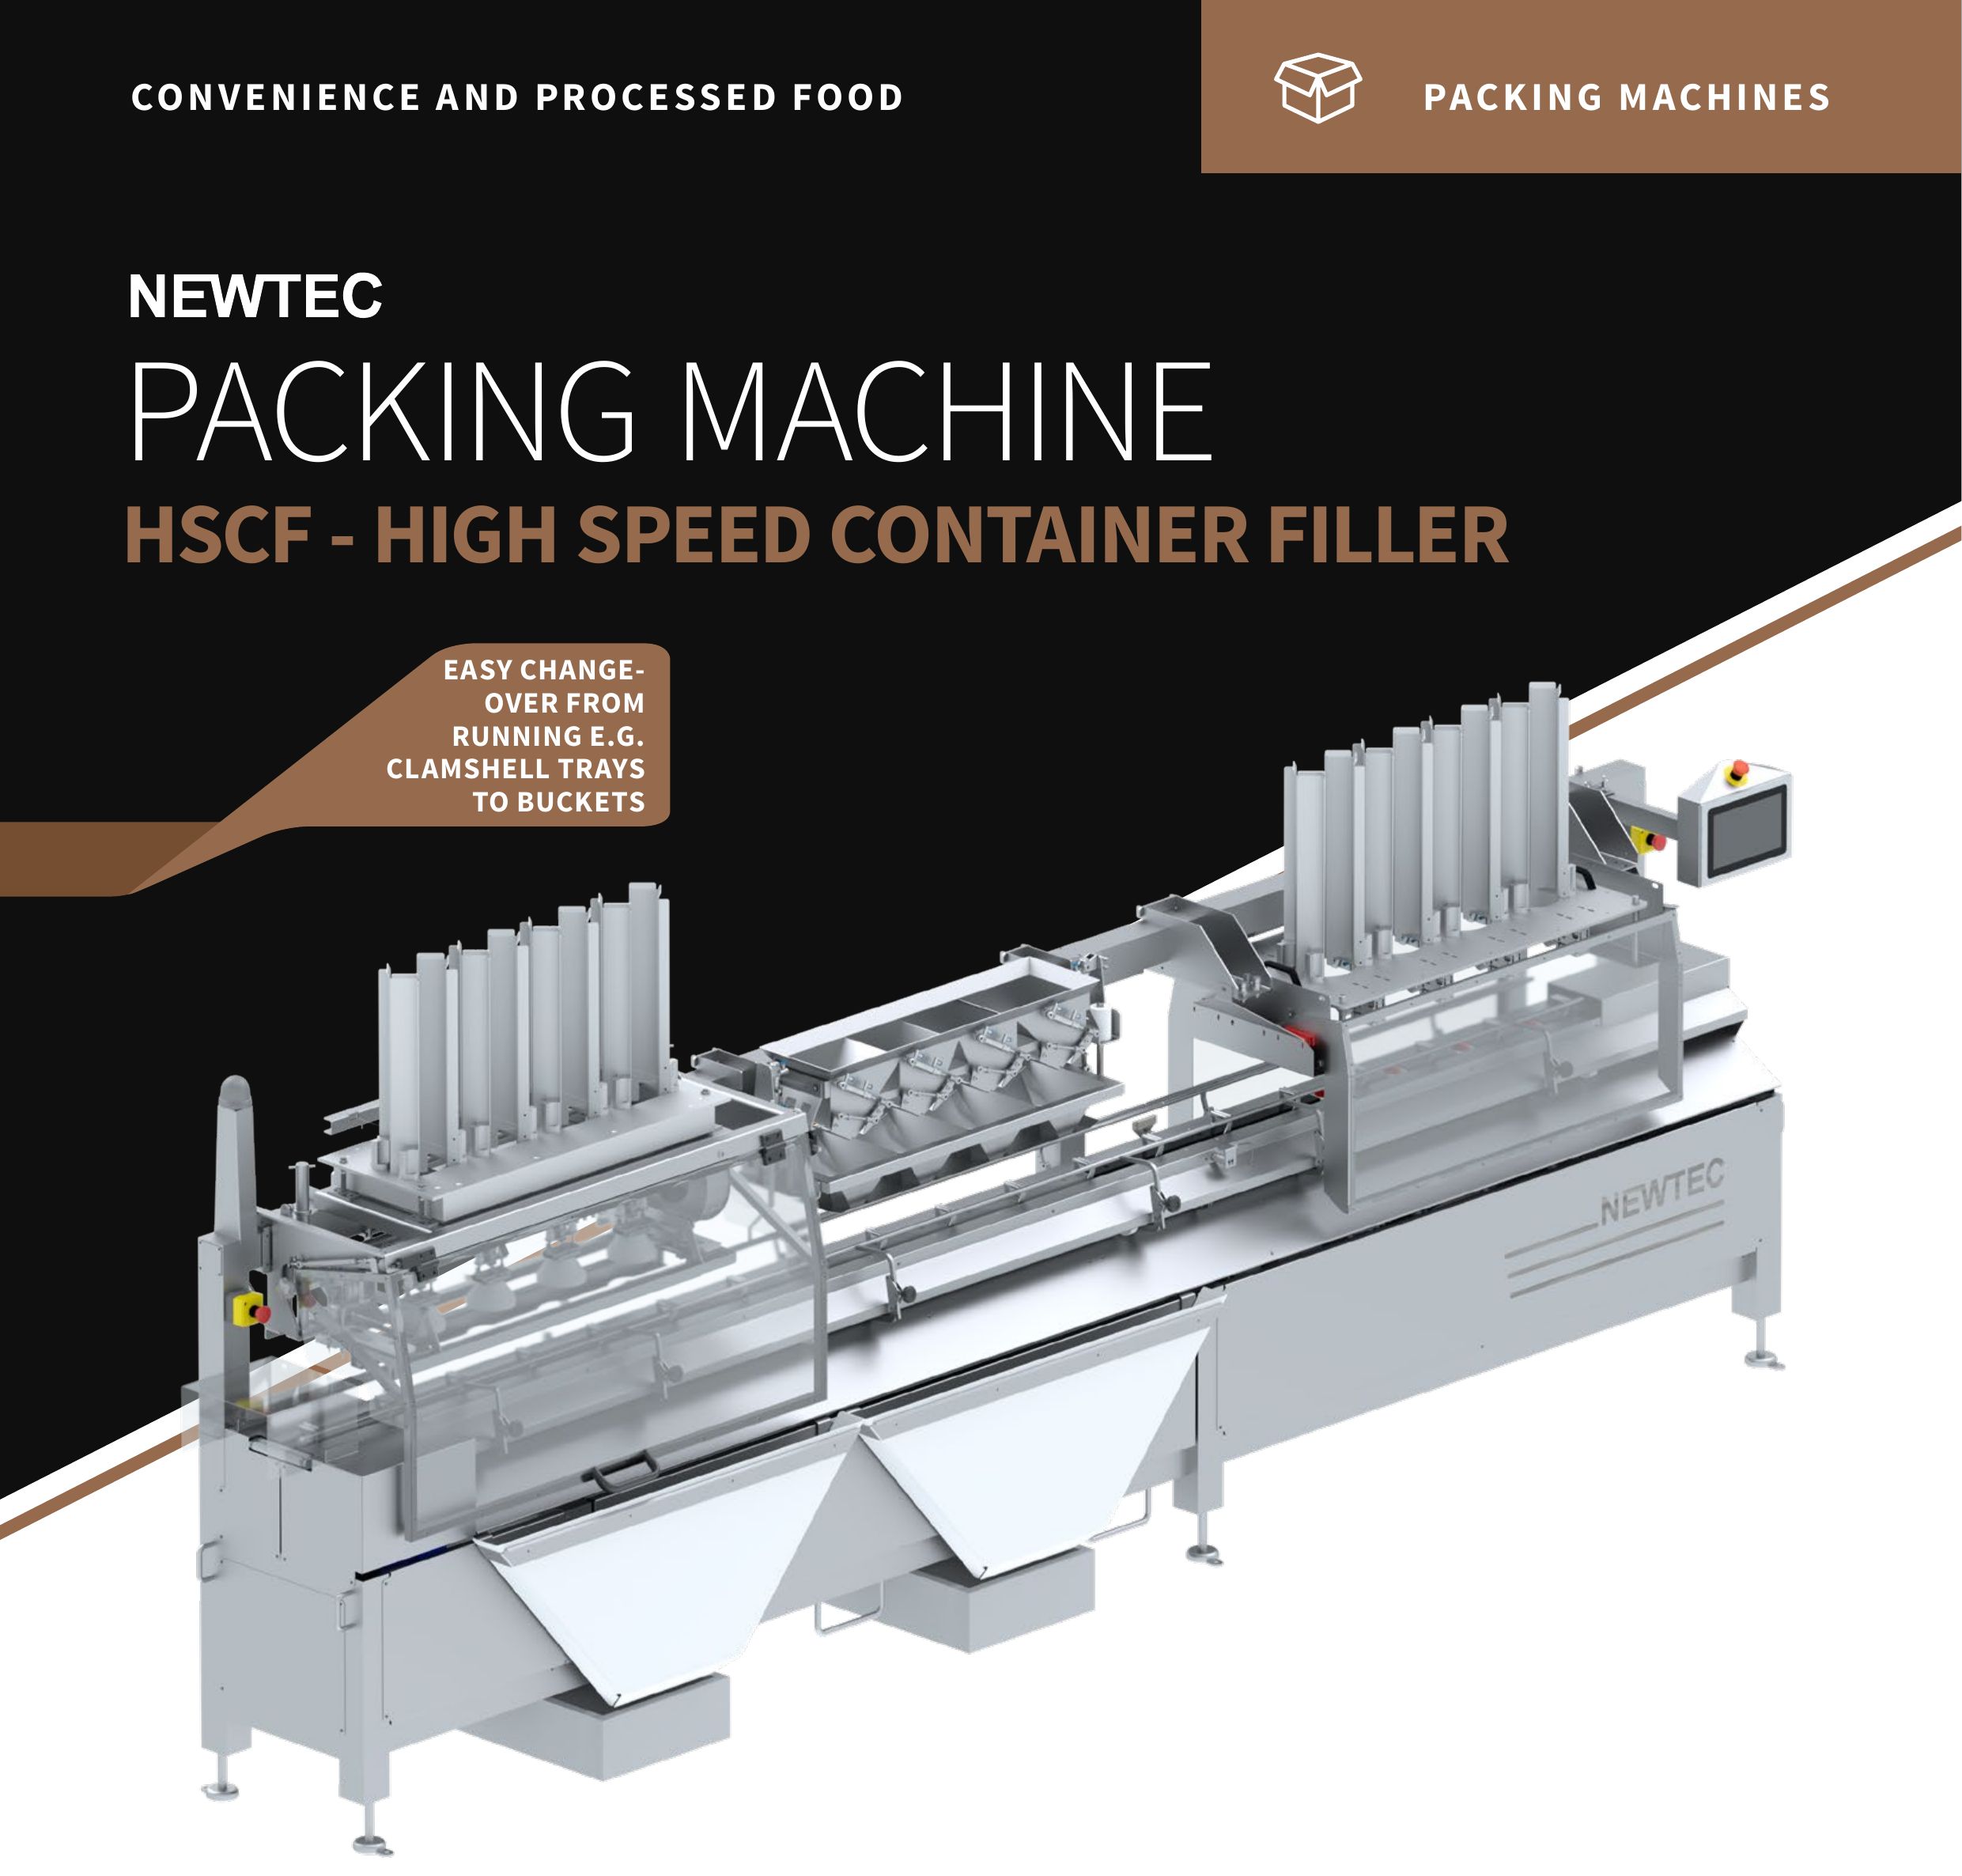 Newtec Packing Machine - HSCF Brochure